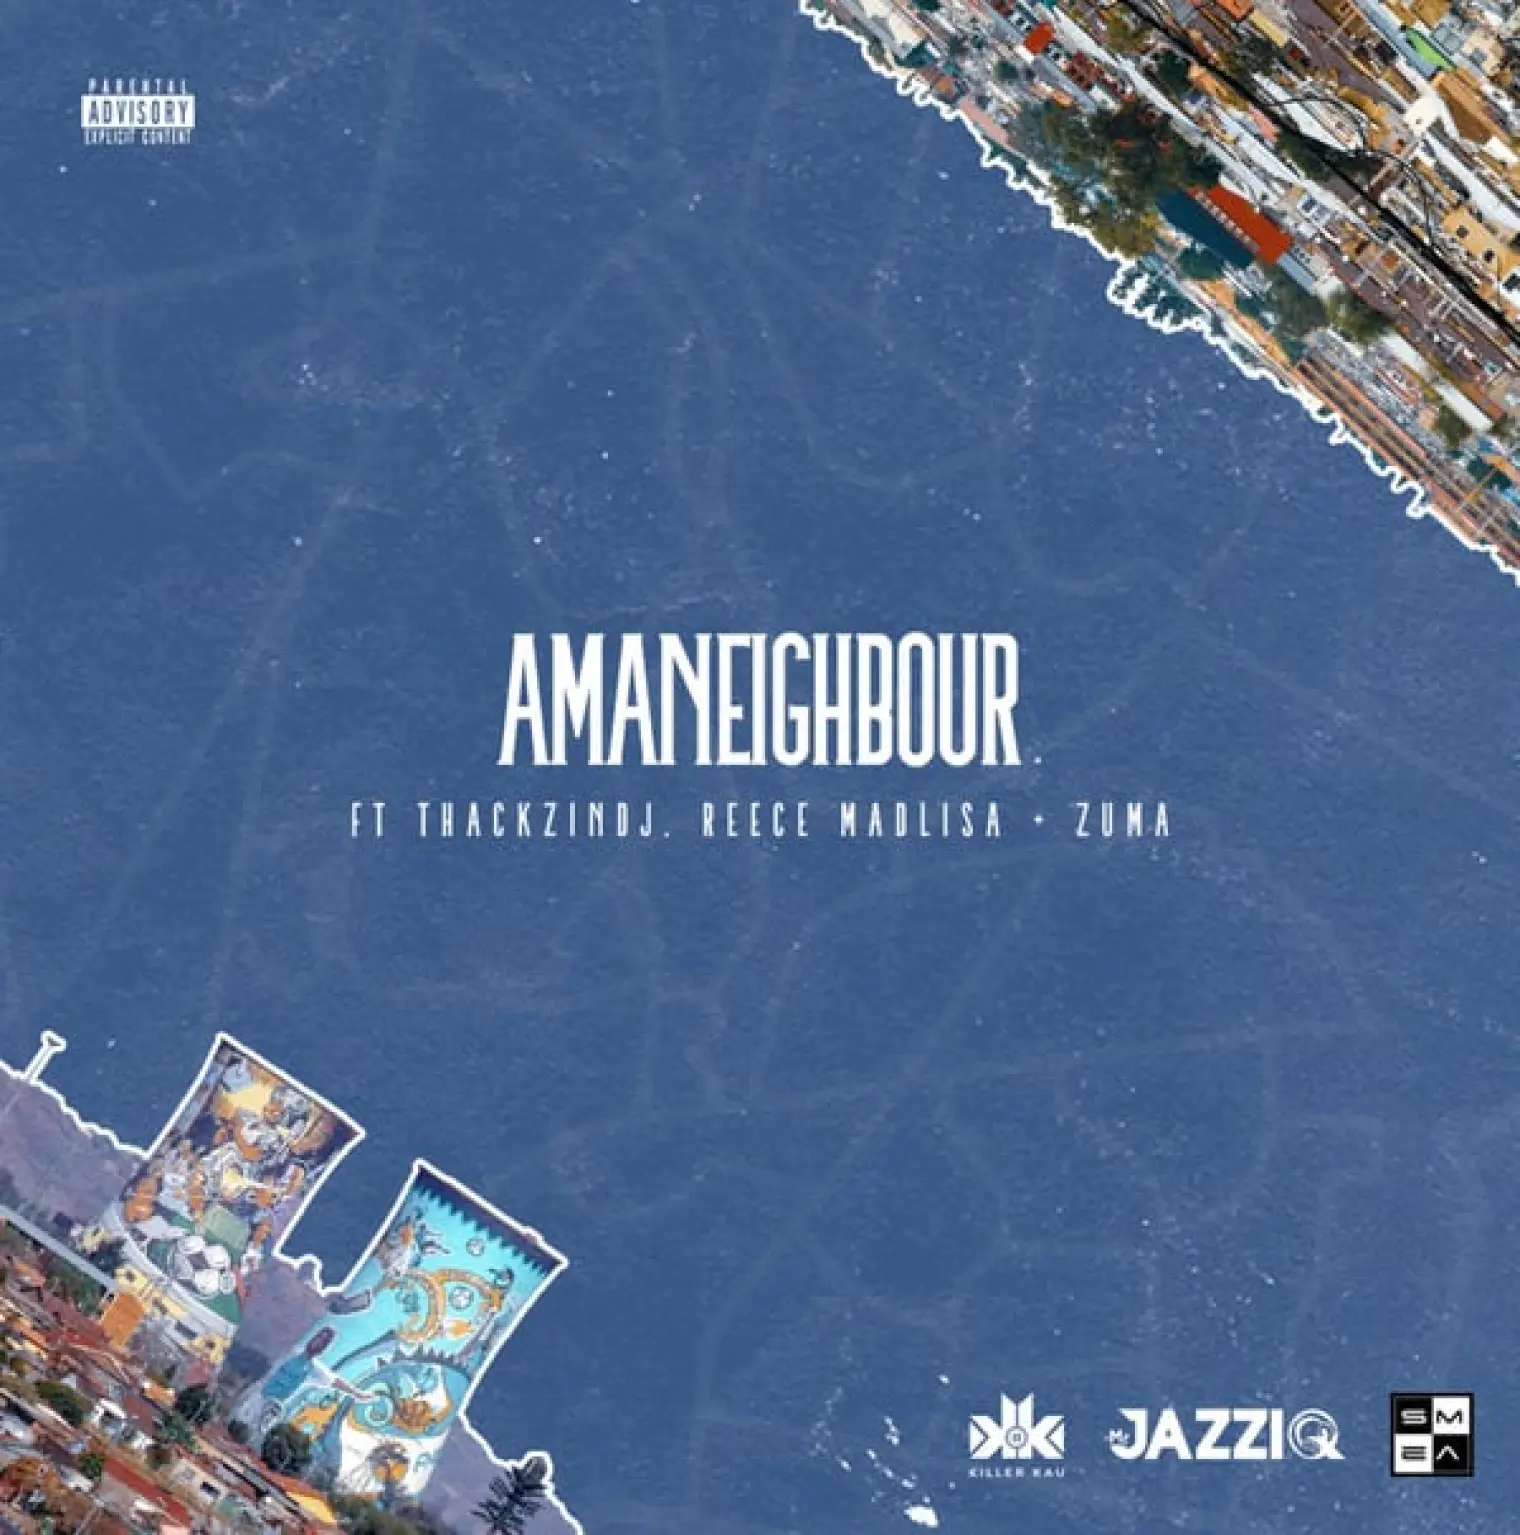 Amaneighbour (feat. Reece Madlisa, Zuma and ThackzinDJ) -  Killer Kau 